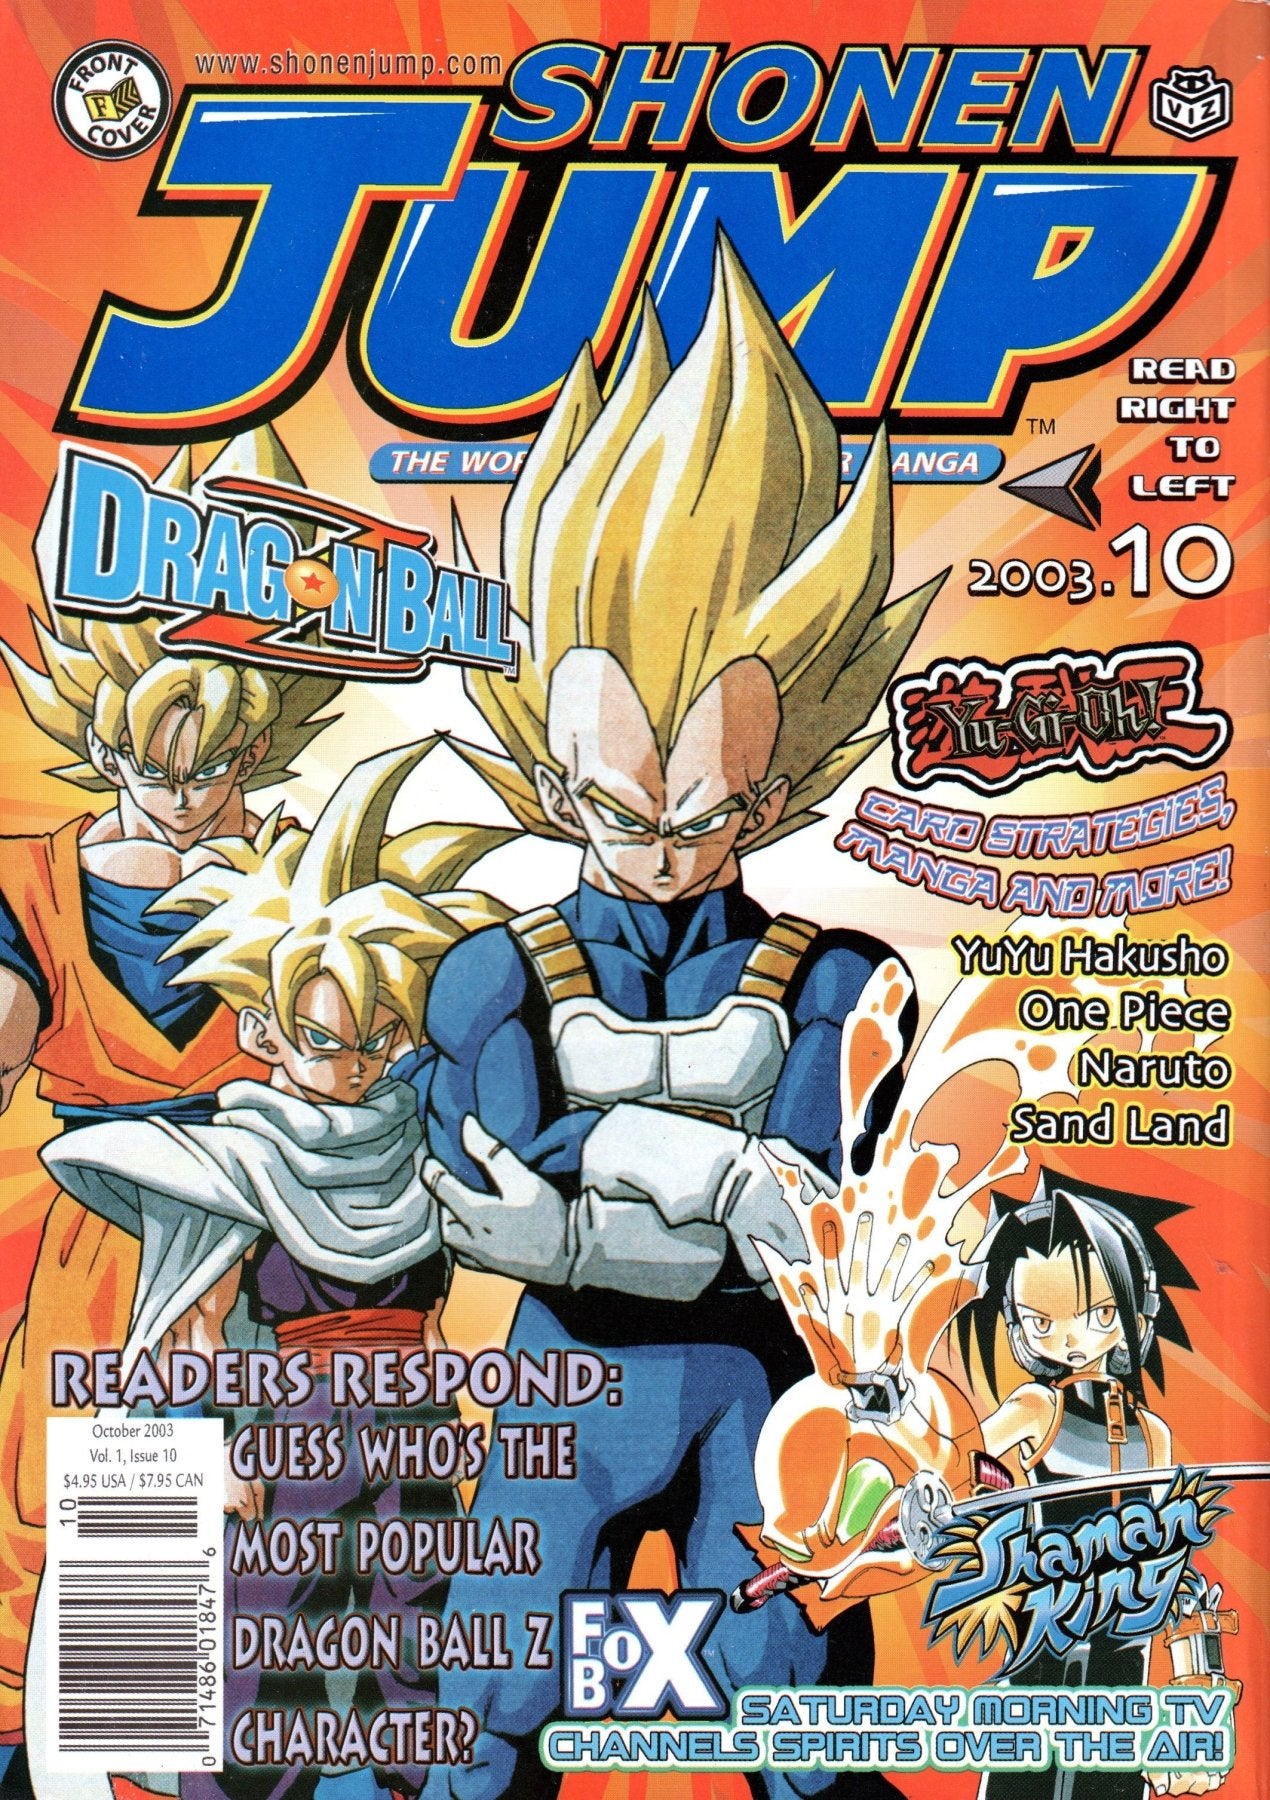 Shonen Jump: October 2003 Volume 1, Issue 10 - Magazine - Retro Island Gaming